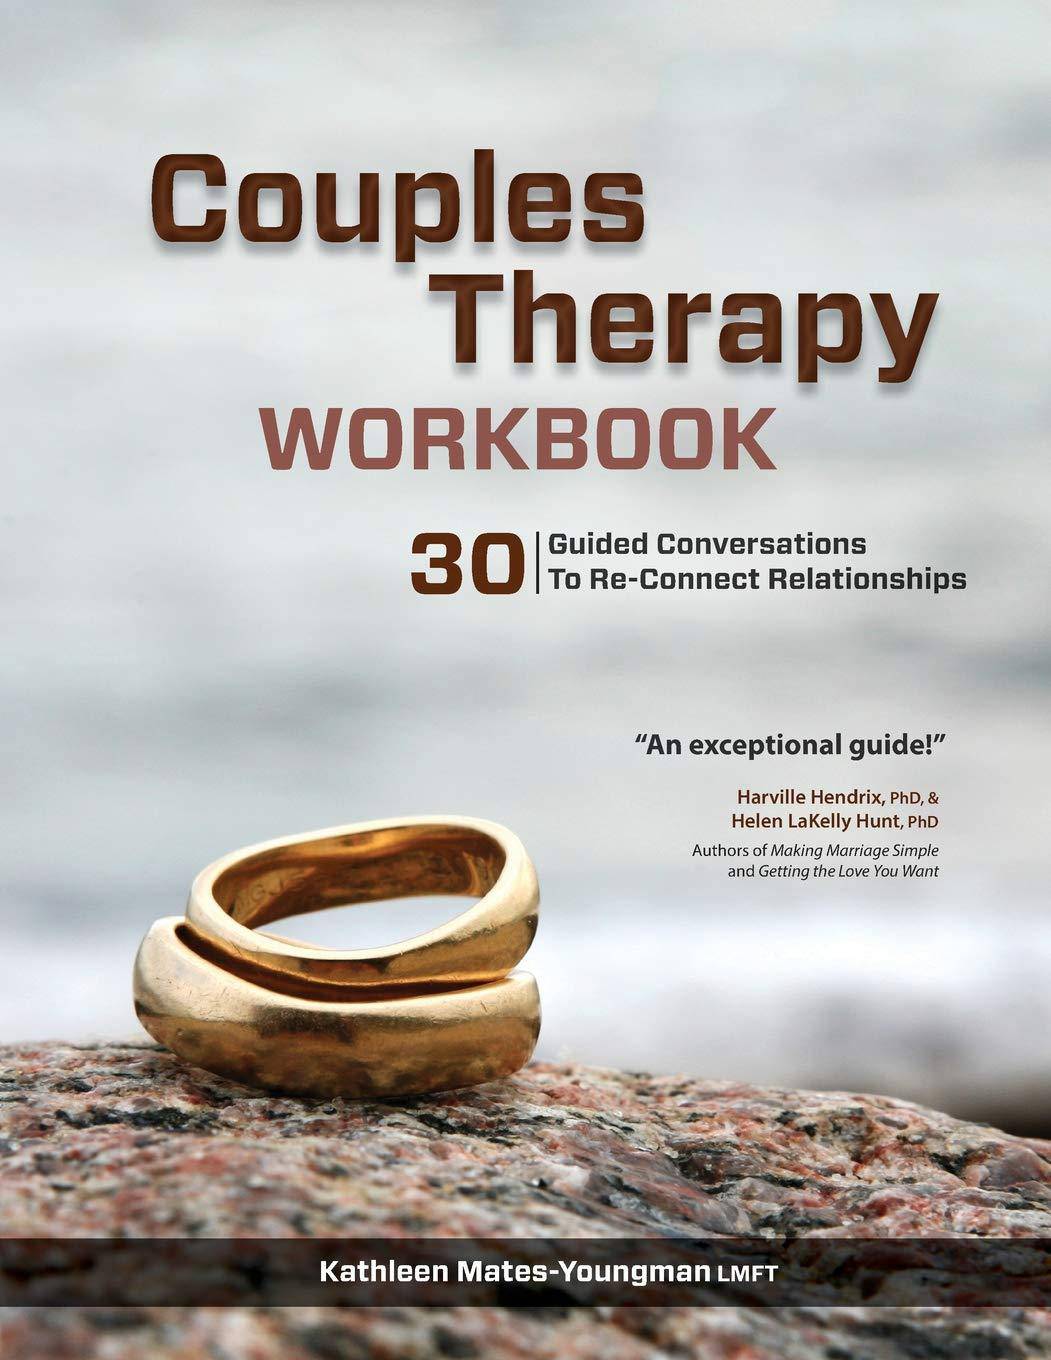 Couples Therapy Workbook - SureShot Books Publishing LLC